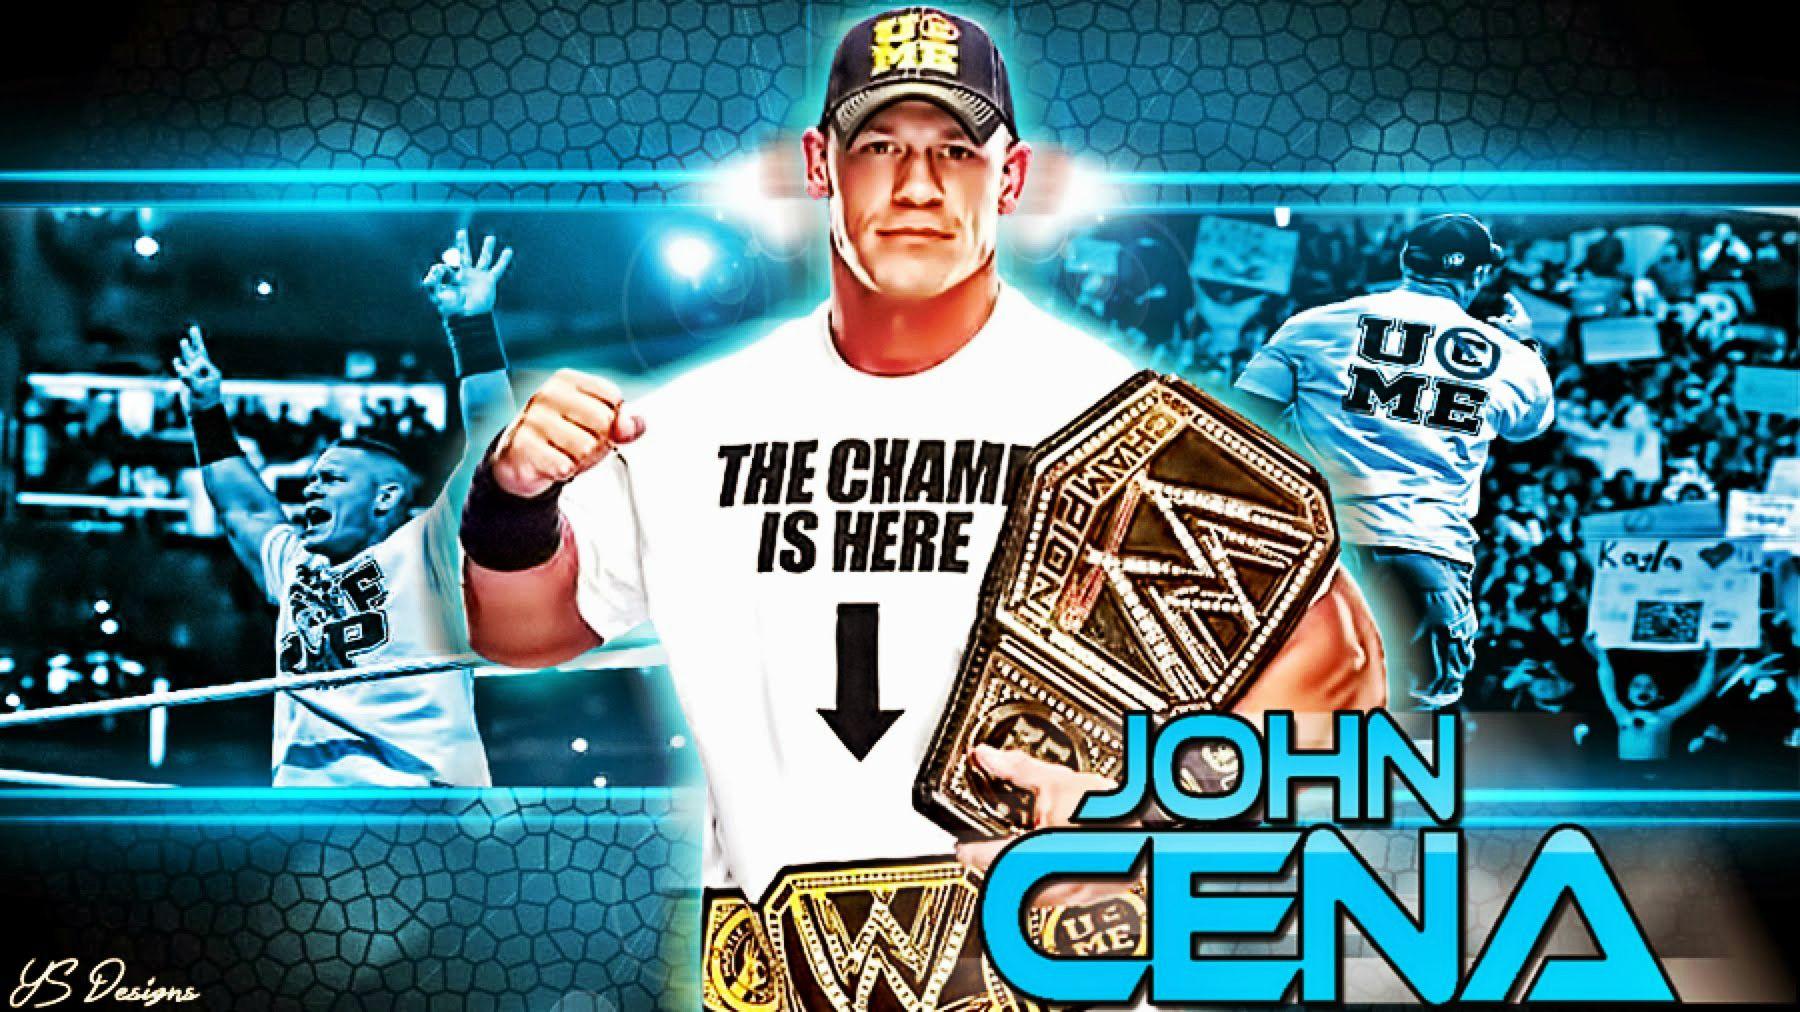 John Cena Wallpaper, 48 Full High Definition John Cena Photo In